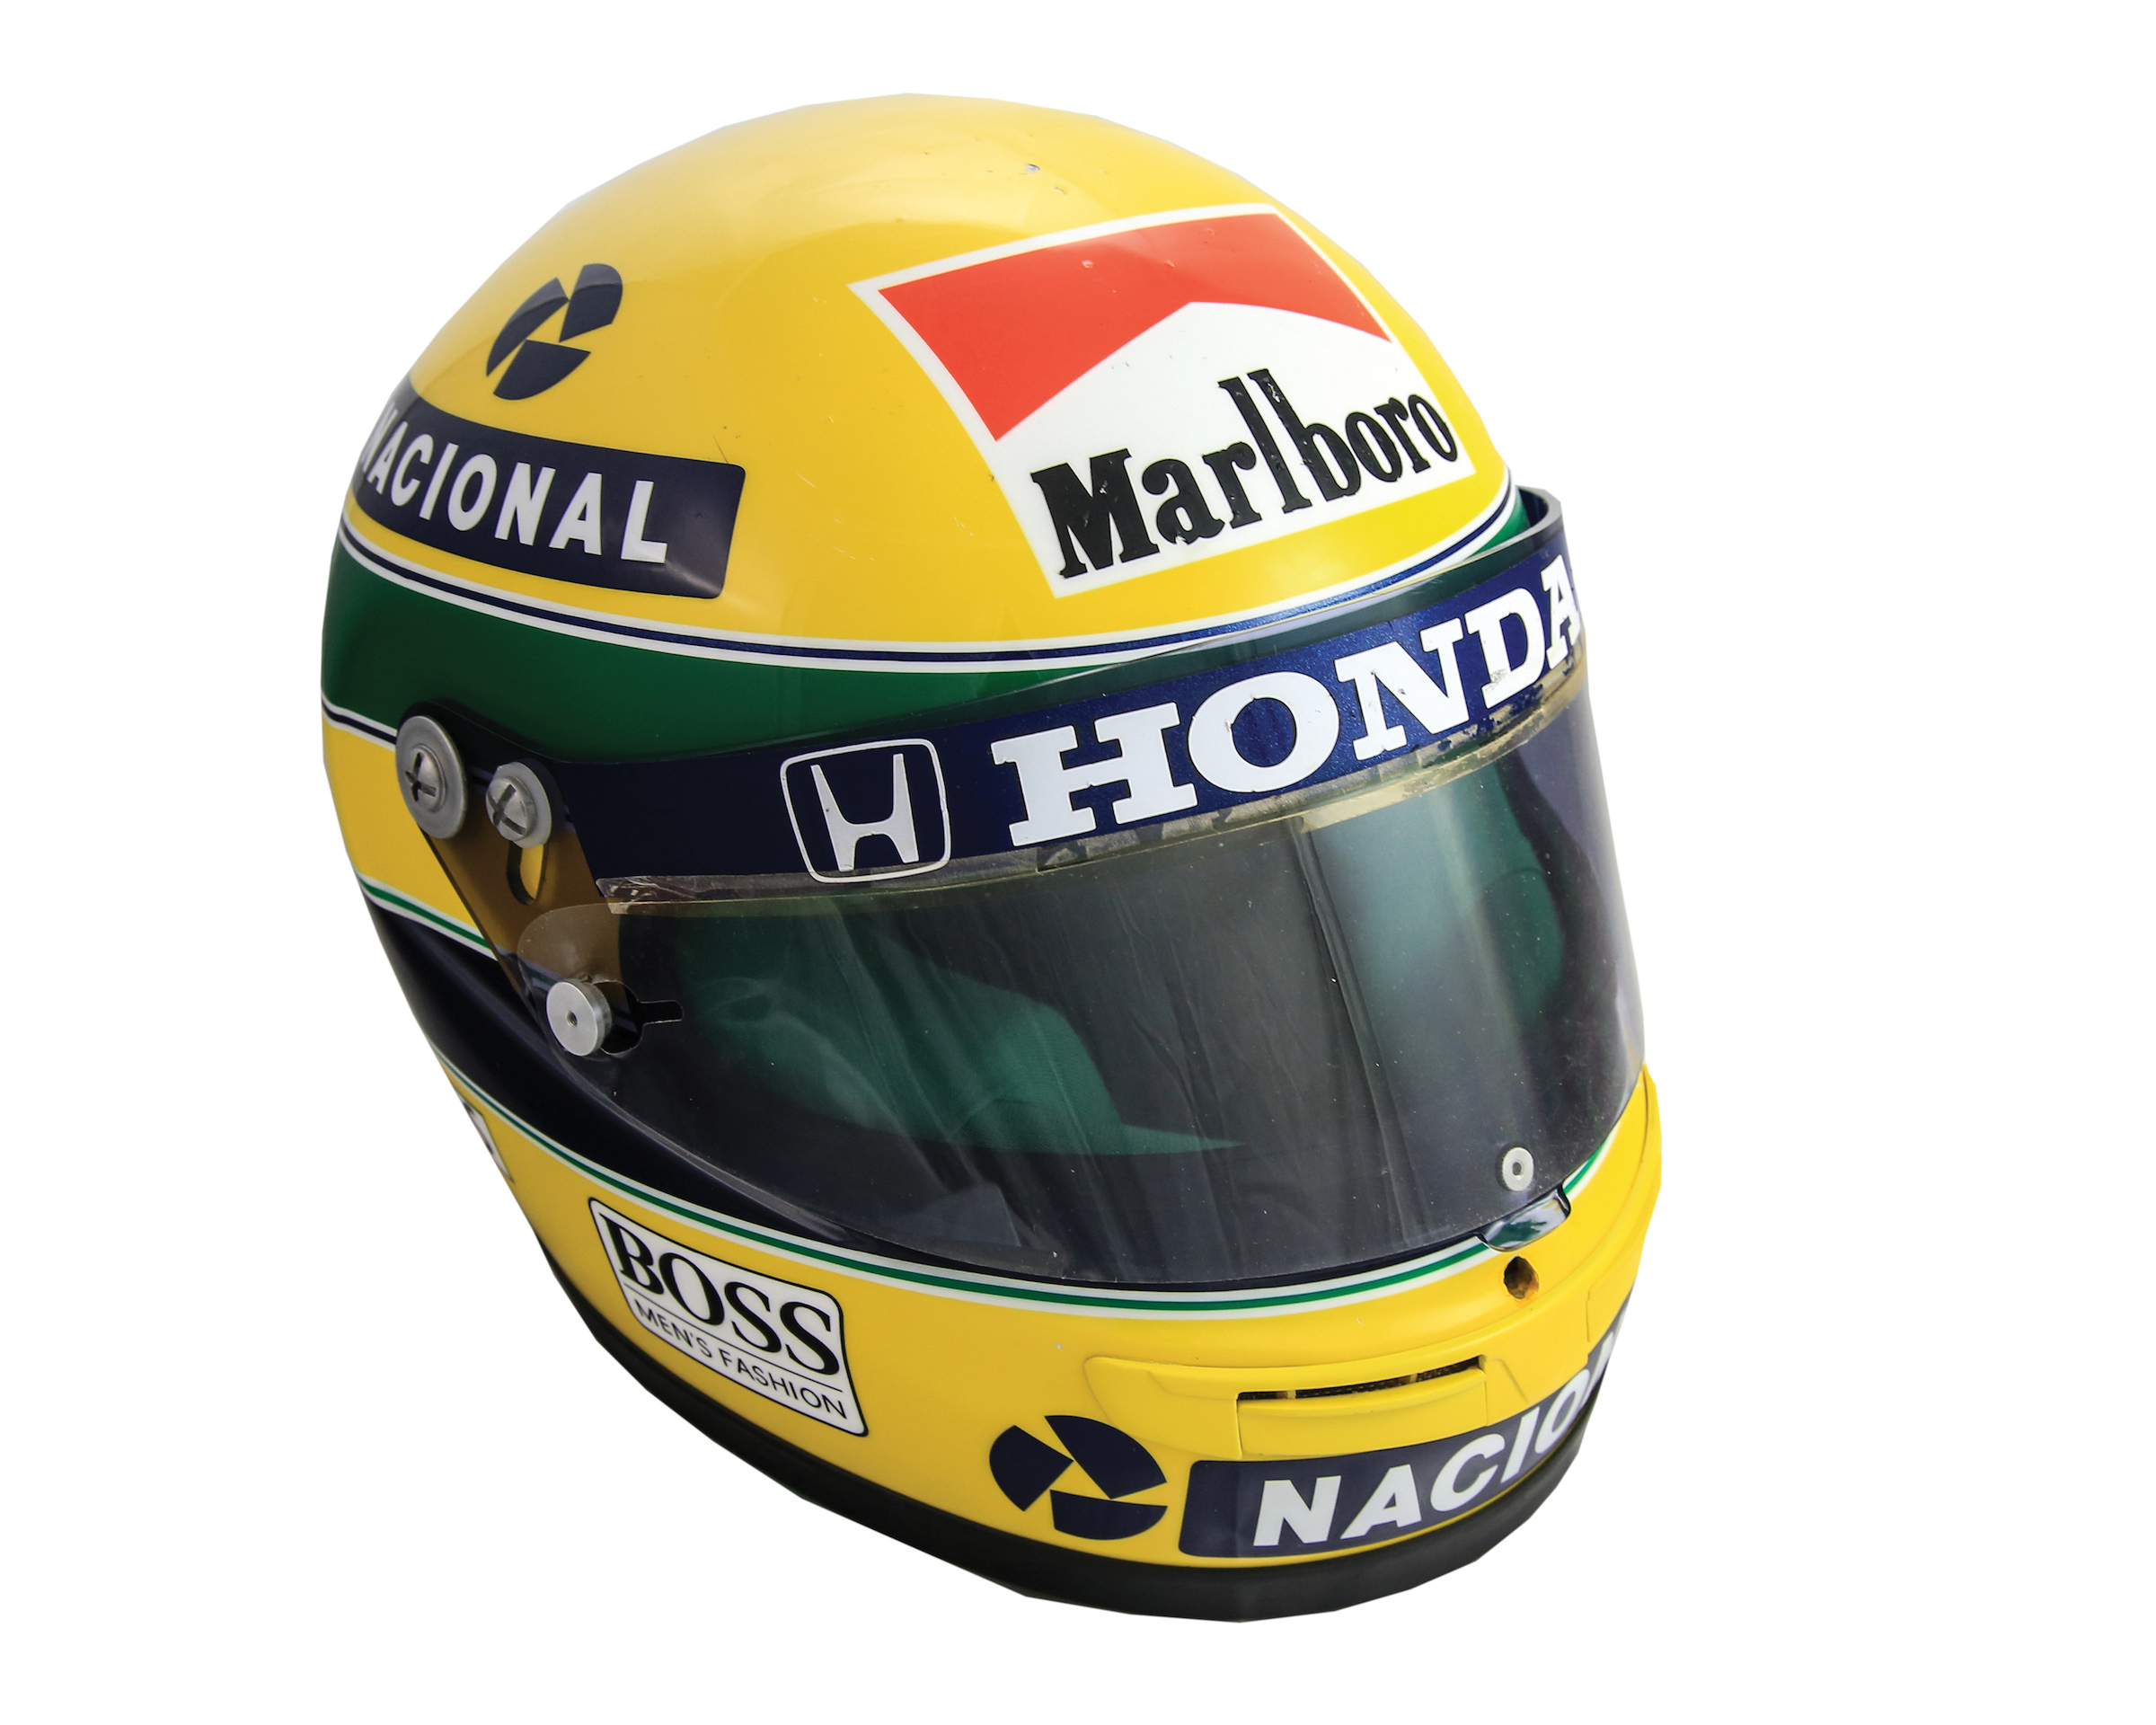 Senna's Helmet - Worn His 1990 1 World Championship Winning Season